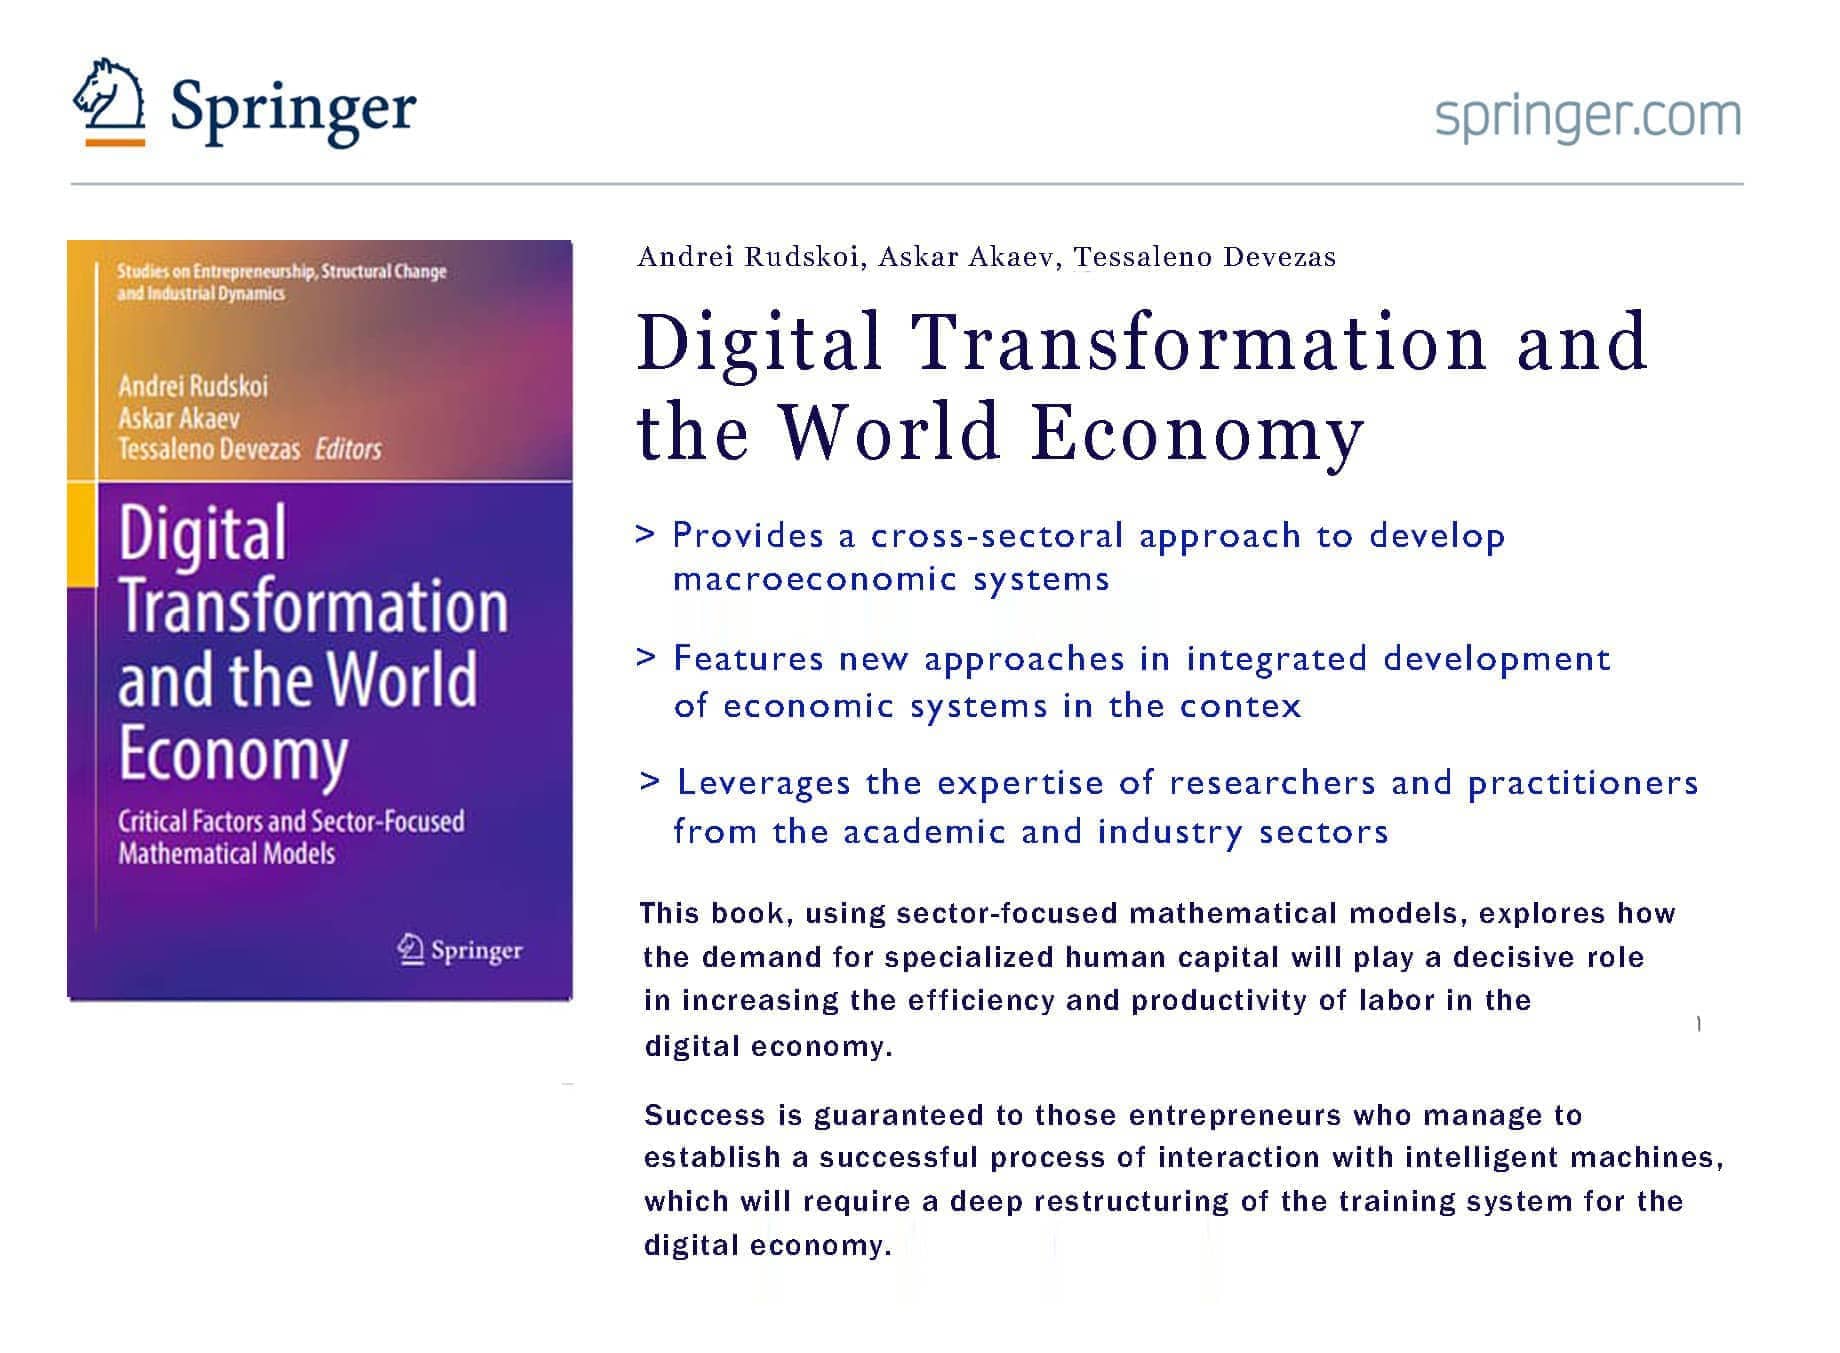 Tessaleno Devezas - Digital Transformation and the World Economy